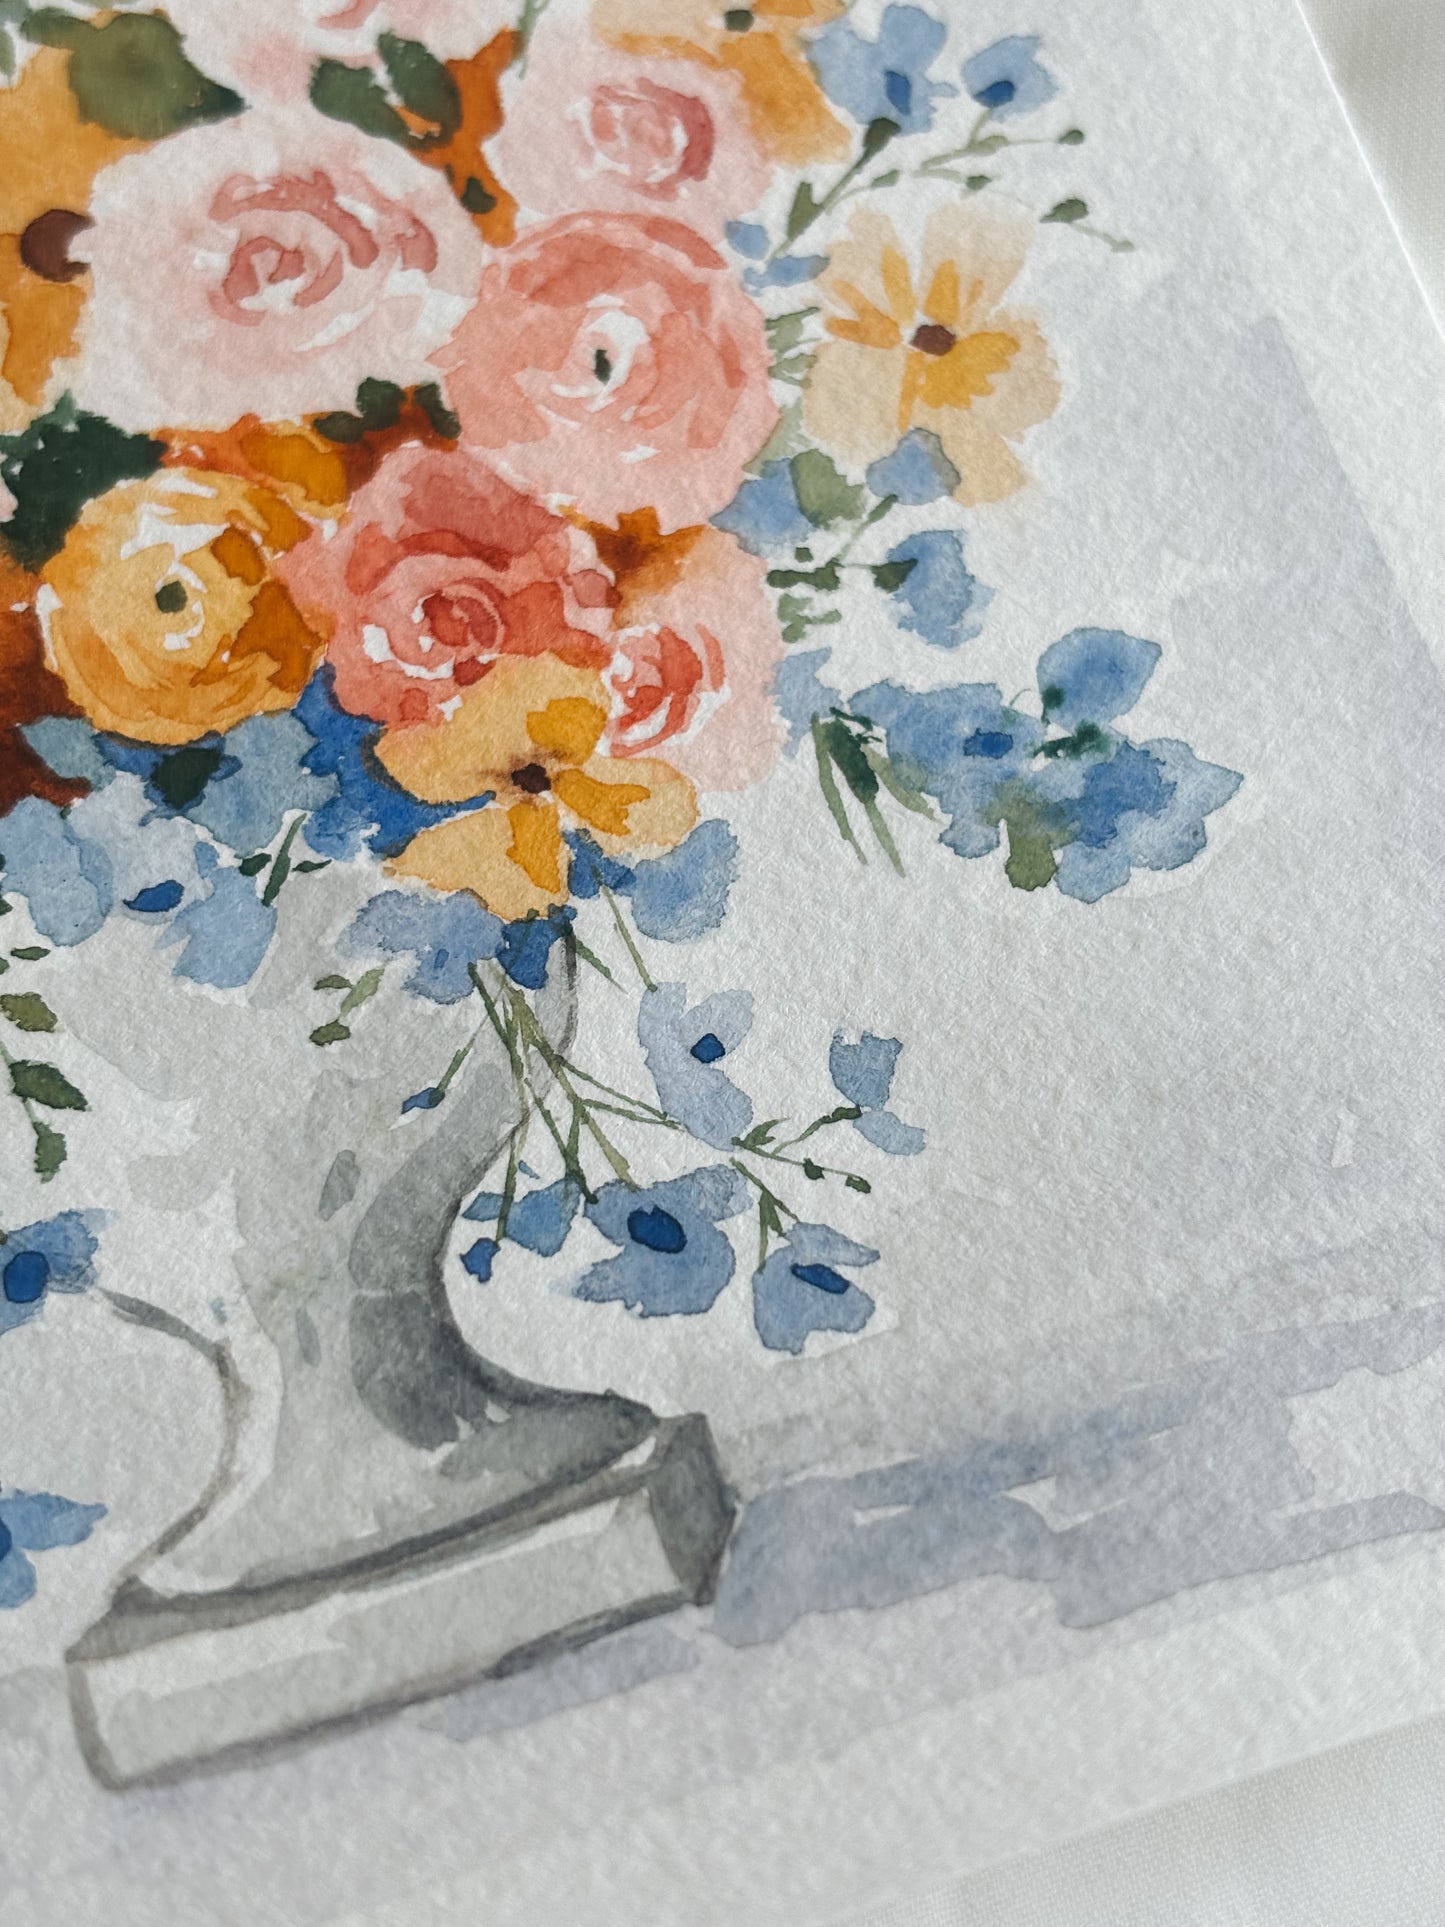 'Watercolor Florals' 4x6 inch original painting